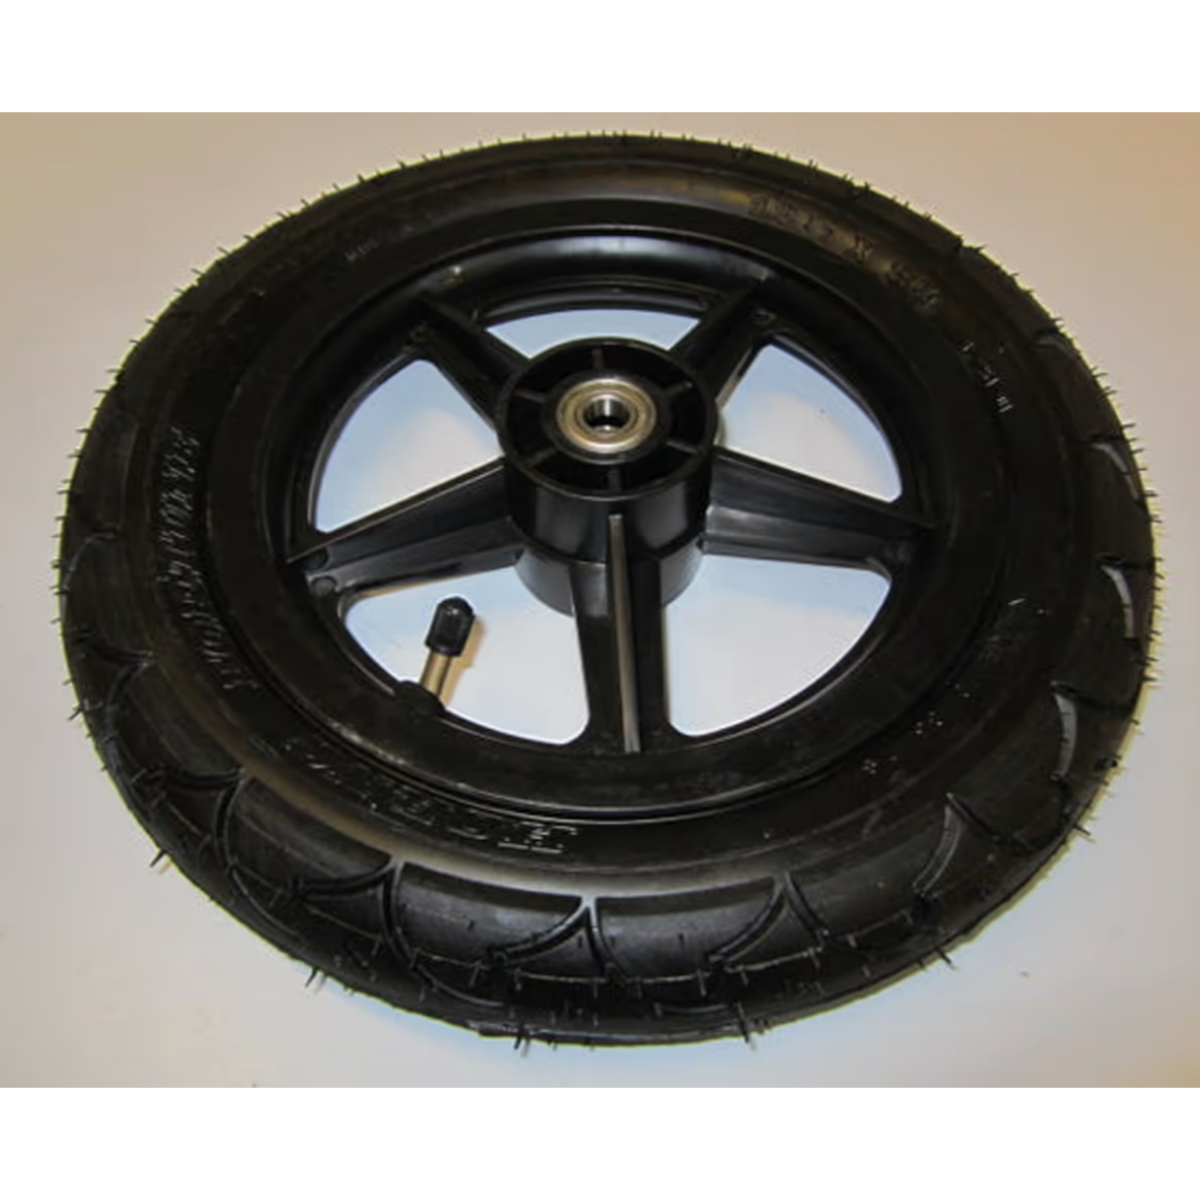 12" Pneumatic tyre to suit Freiheit Stroller XTreme